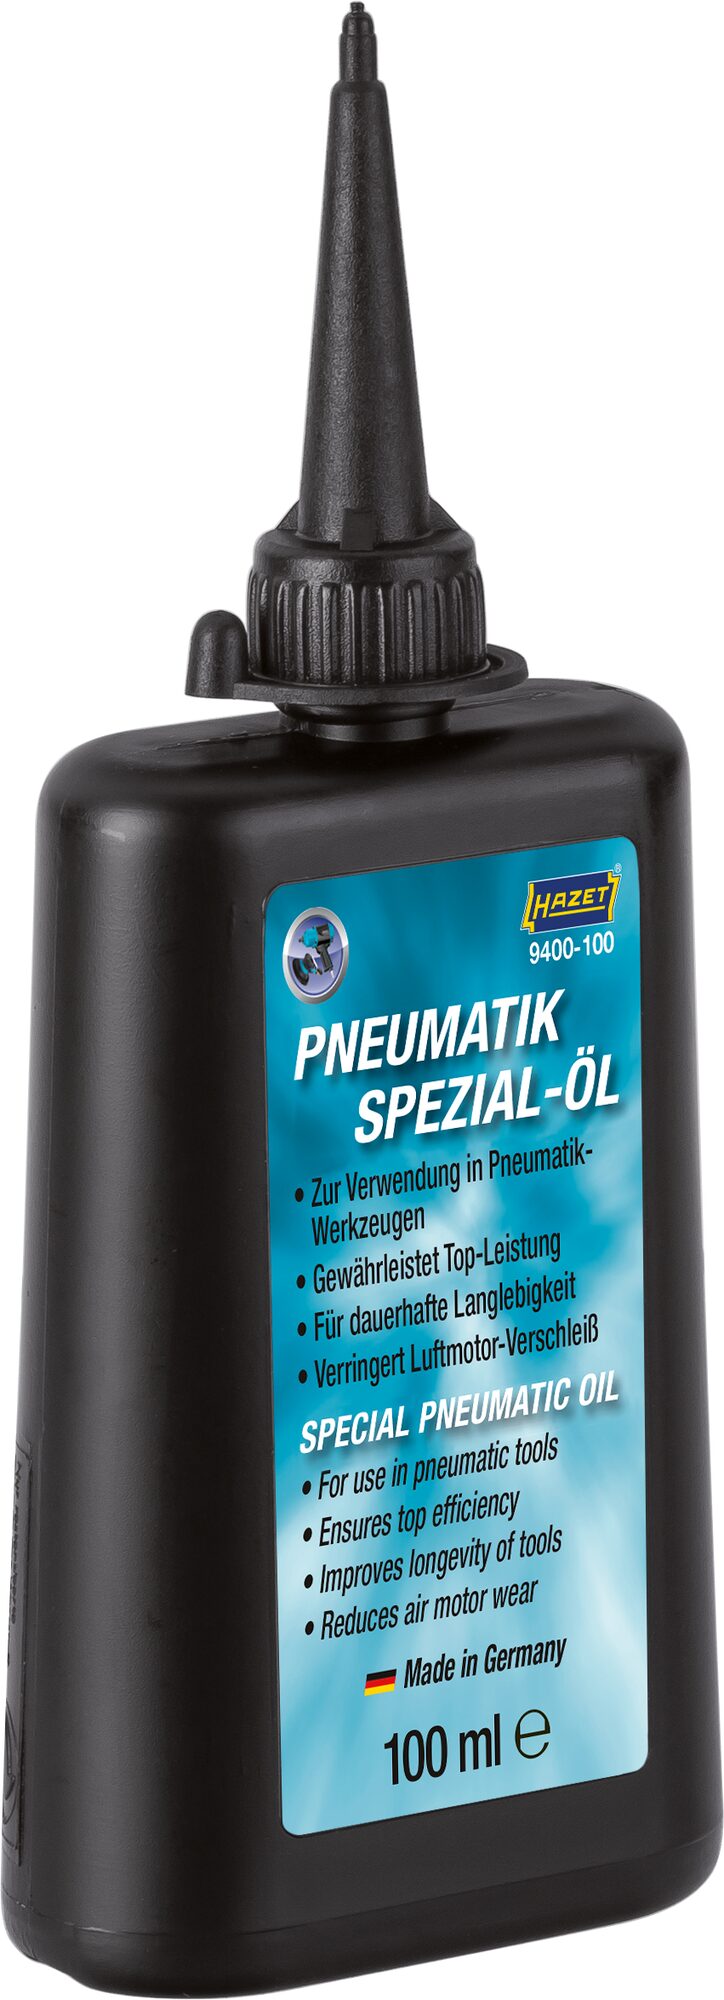 HAZET Pneumatik Spezial-Öl · 100 ml 9400-100